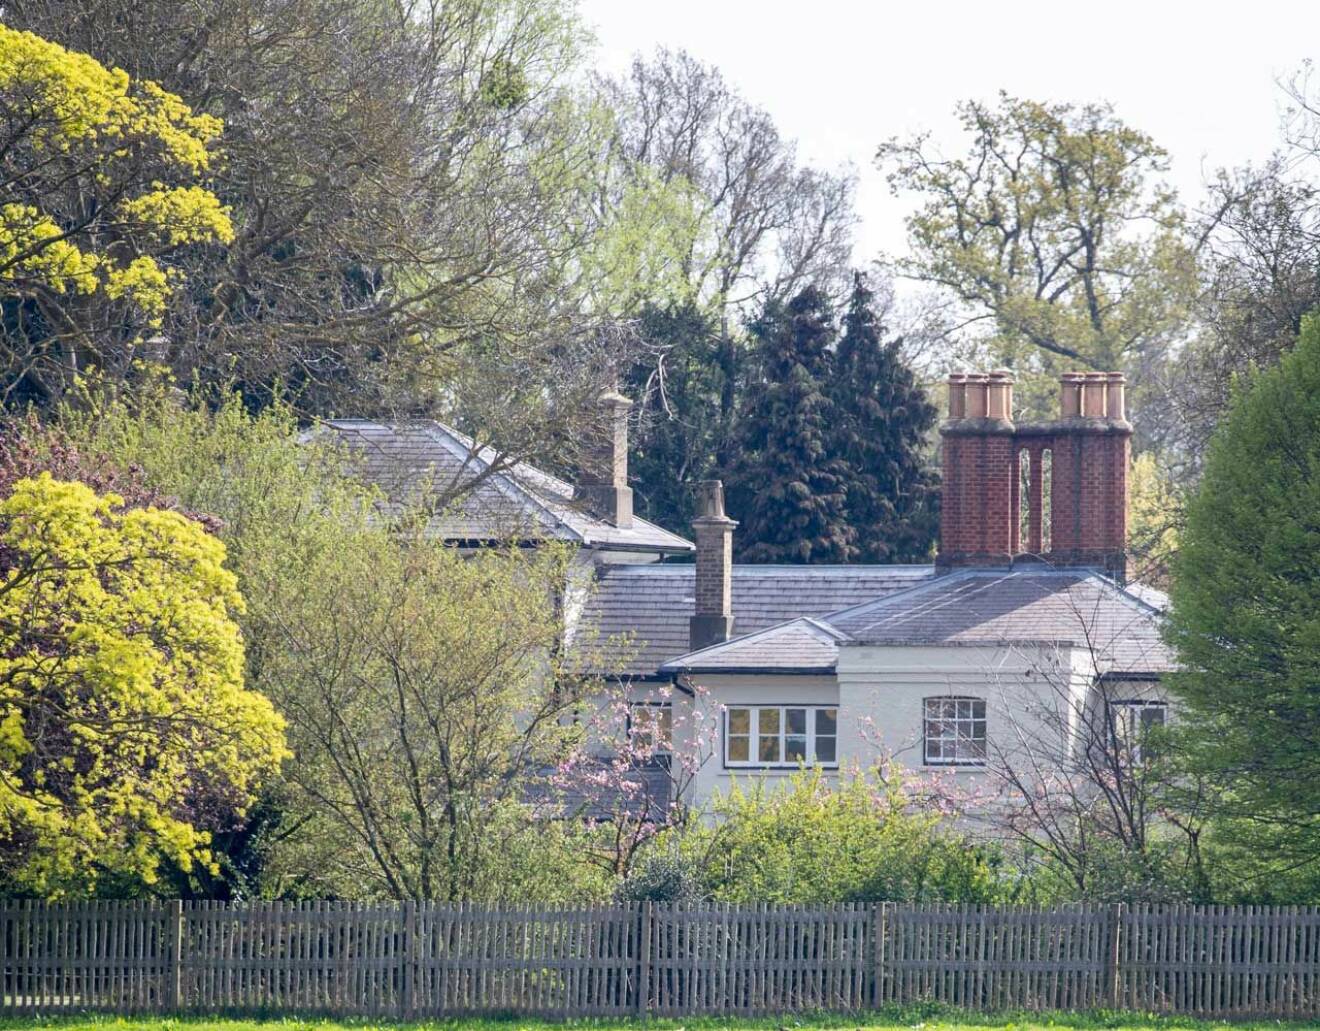 Meghans och prins Harrys nya hem Frogmore Cottage i Windsor.